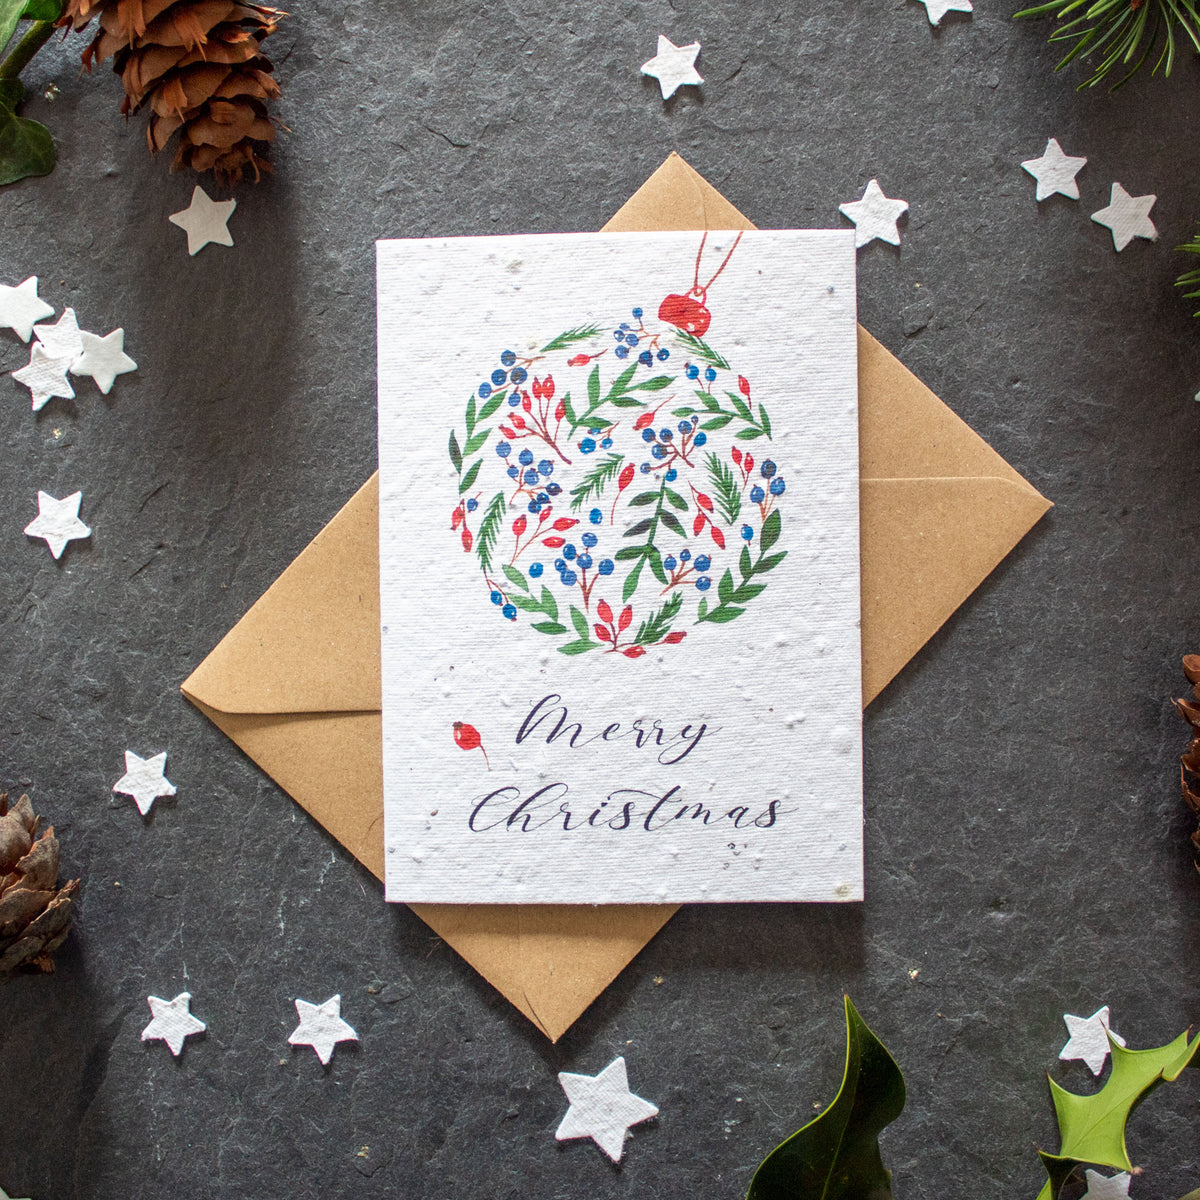 Plantable Christmas Card - Greenery Bauble | Greetings Card - The Naughty Shrew